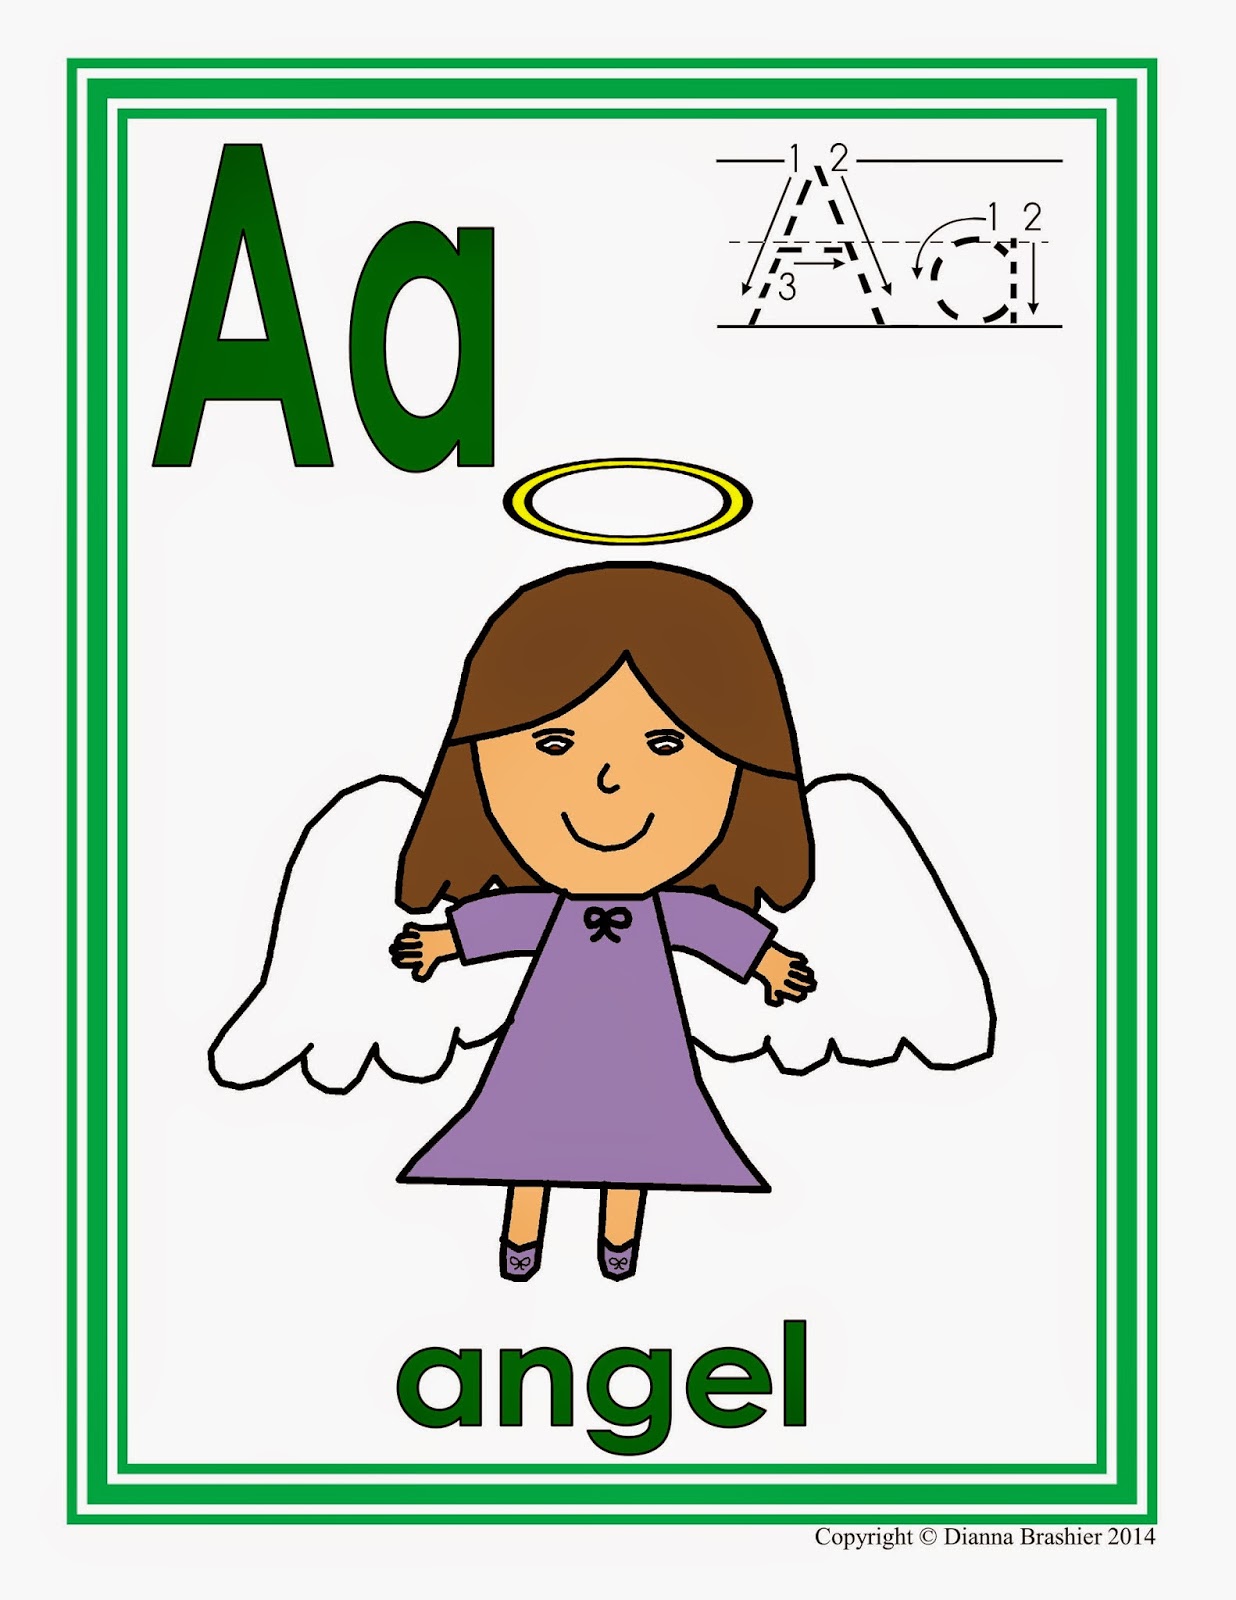 https://www.teacherspayteachers.com/Product/Alphabet-Flashcards-with-a-Christian-Theme-1694963